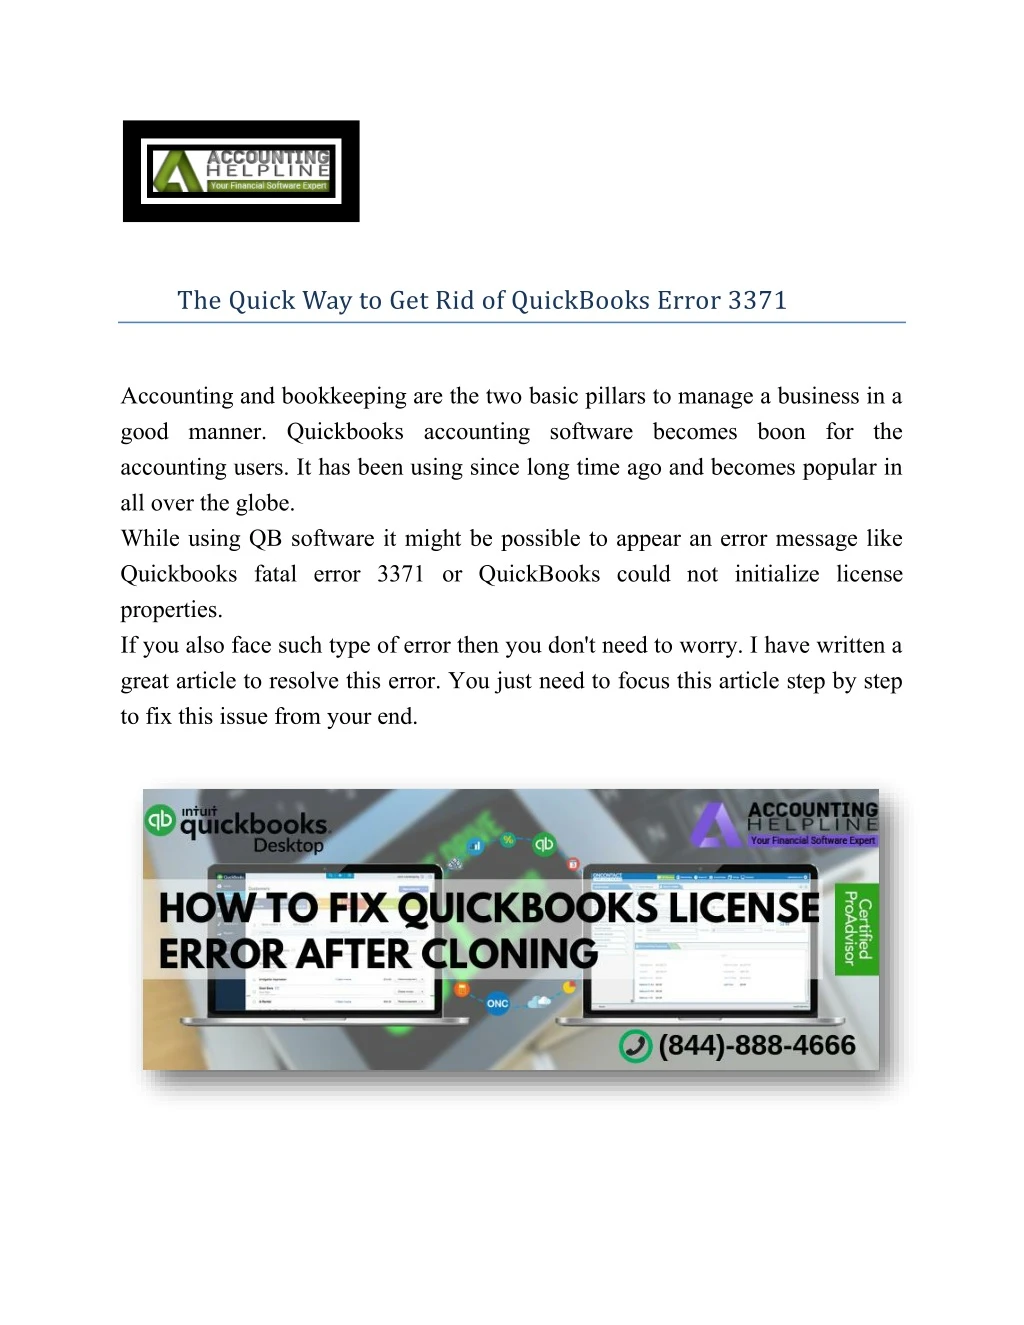 the quick way to get rid of quickbooks error 3371